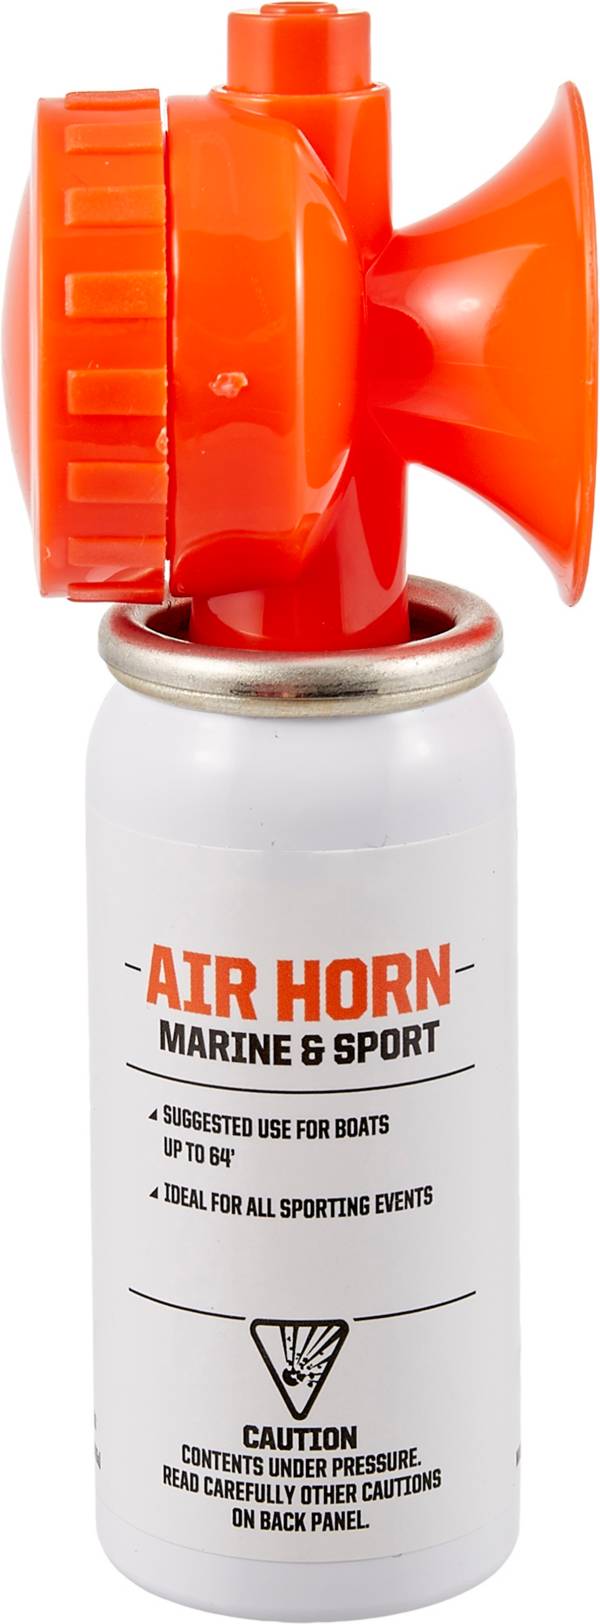 Quest Marine & Sport Mini Air Horn product image